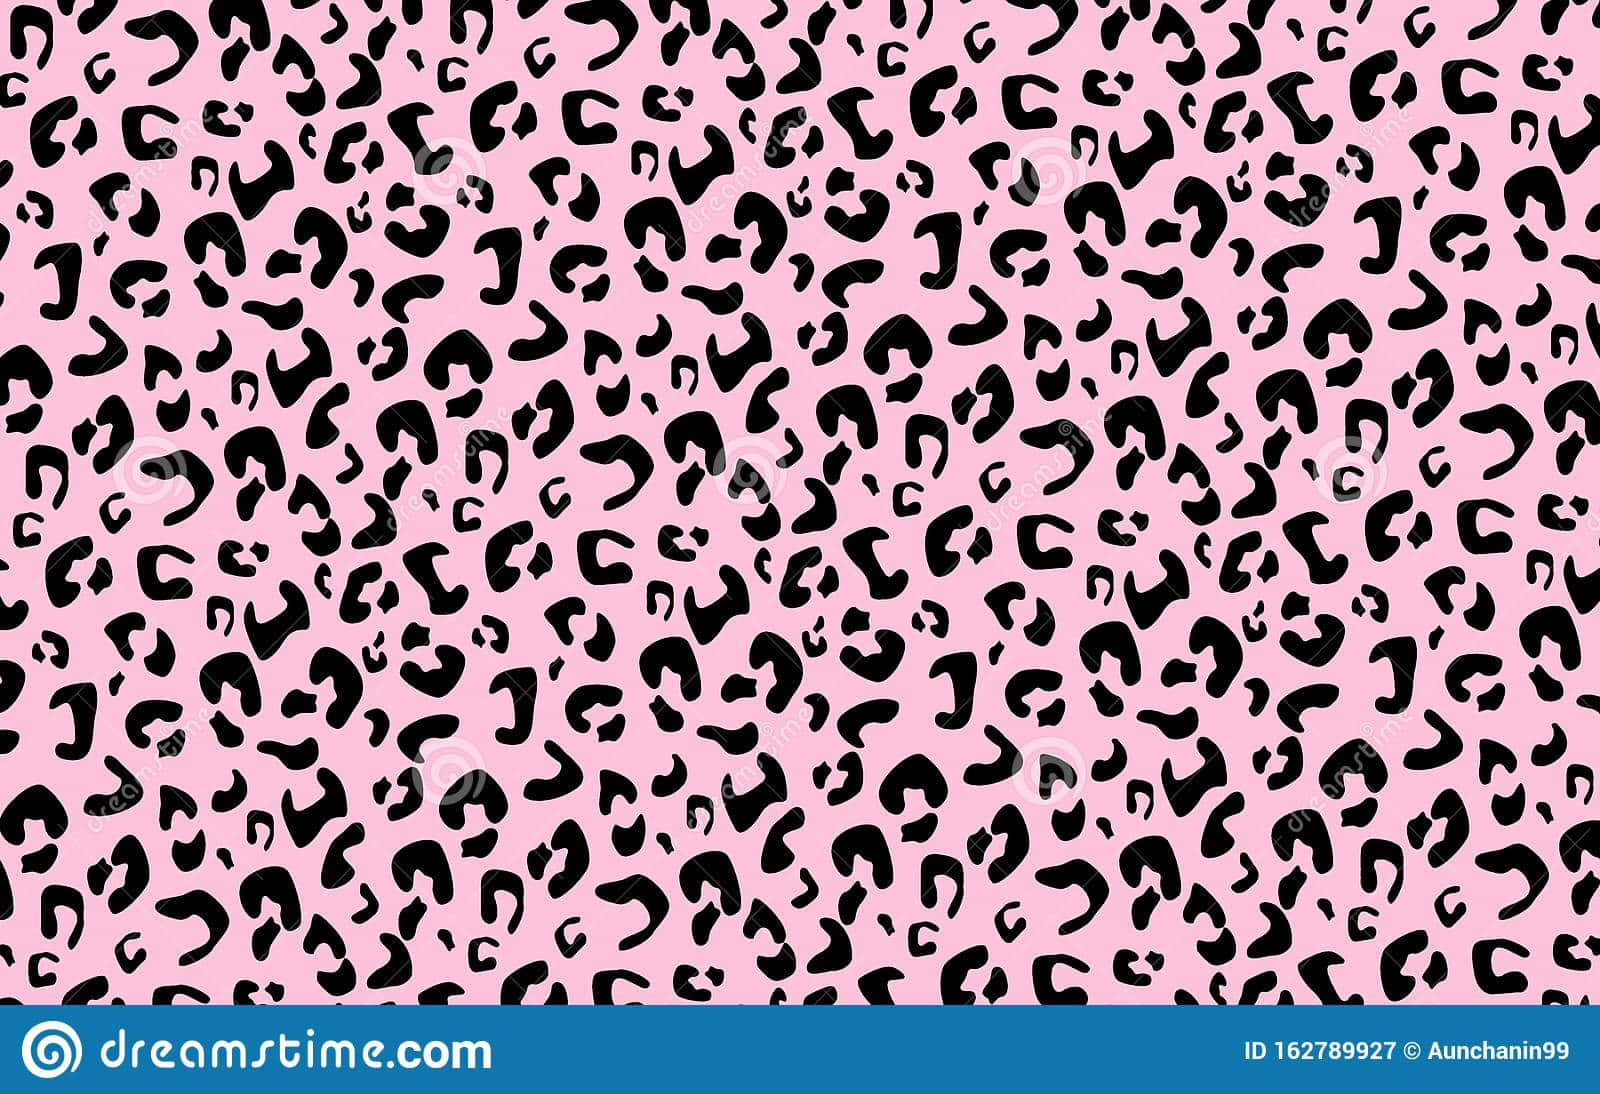 Leopard Print Pattern On Pink Background Wallpaper